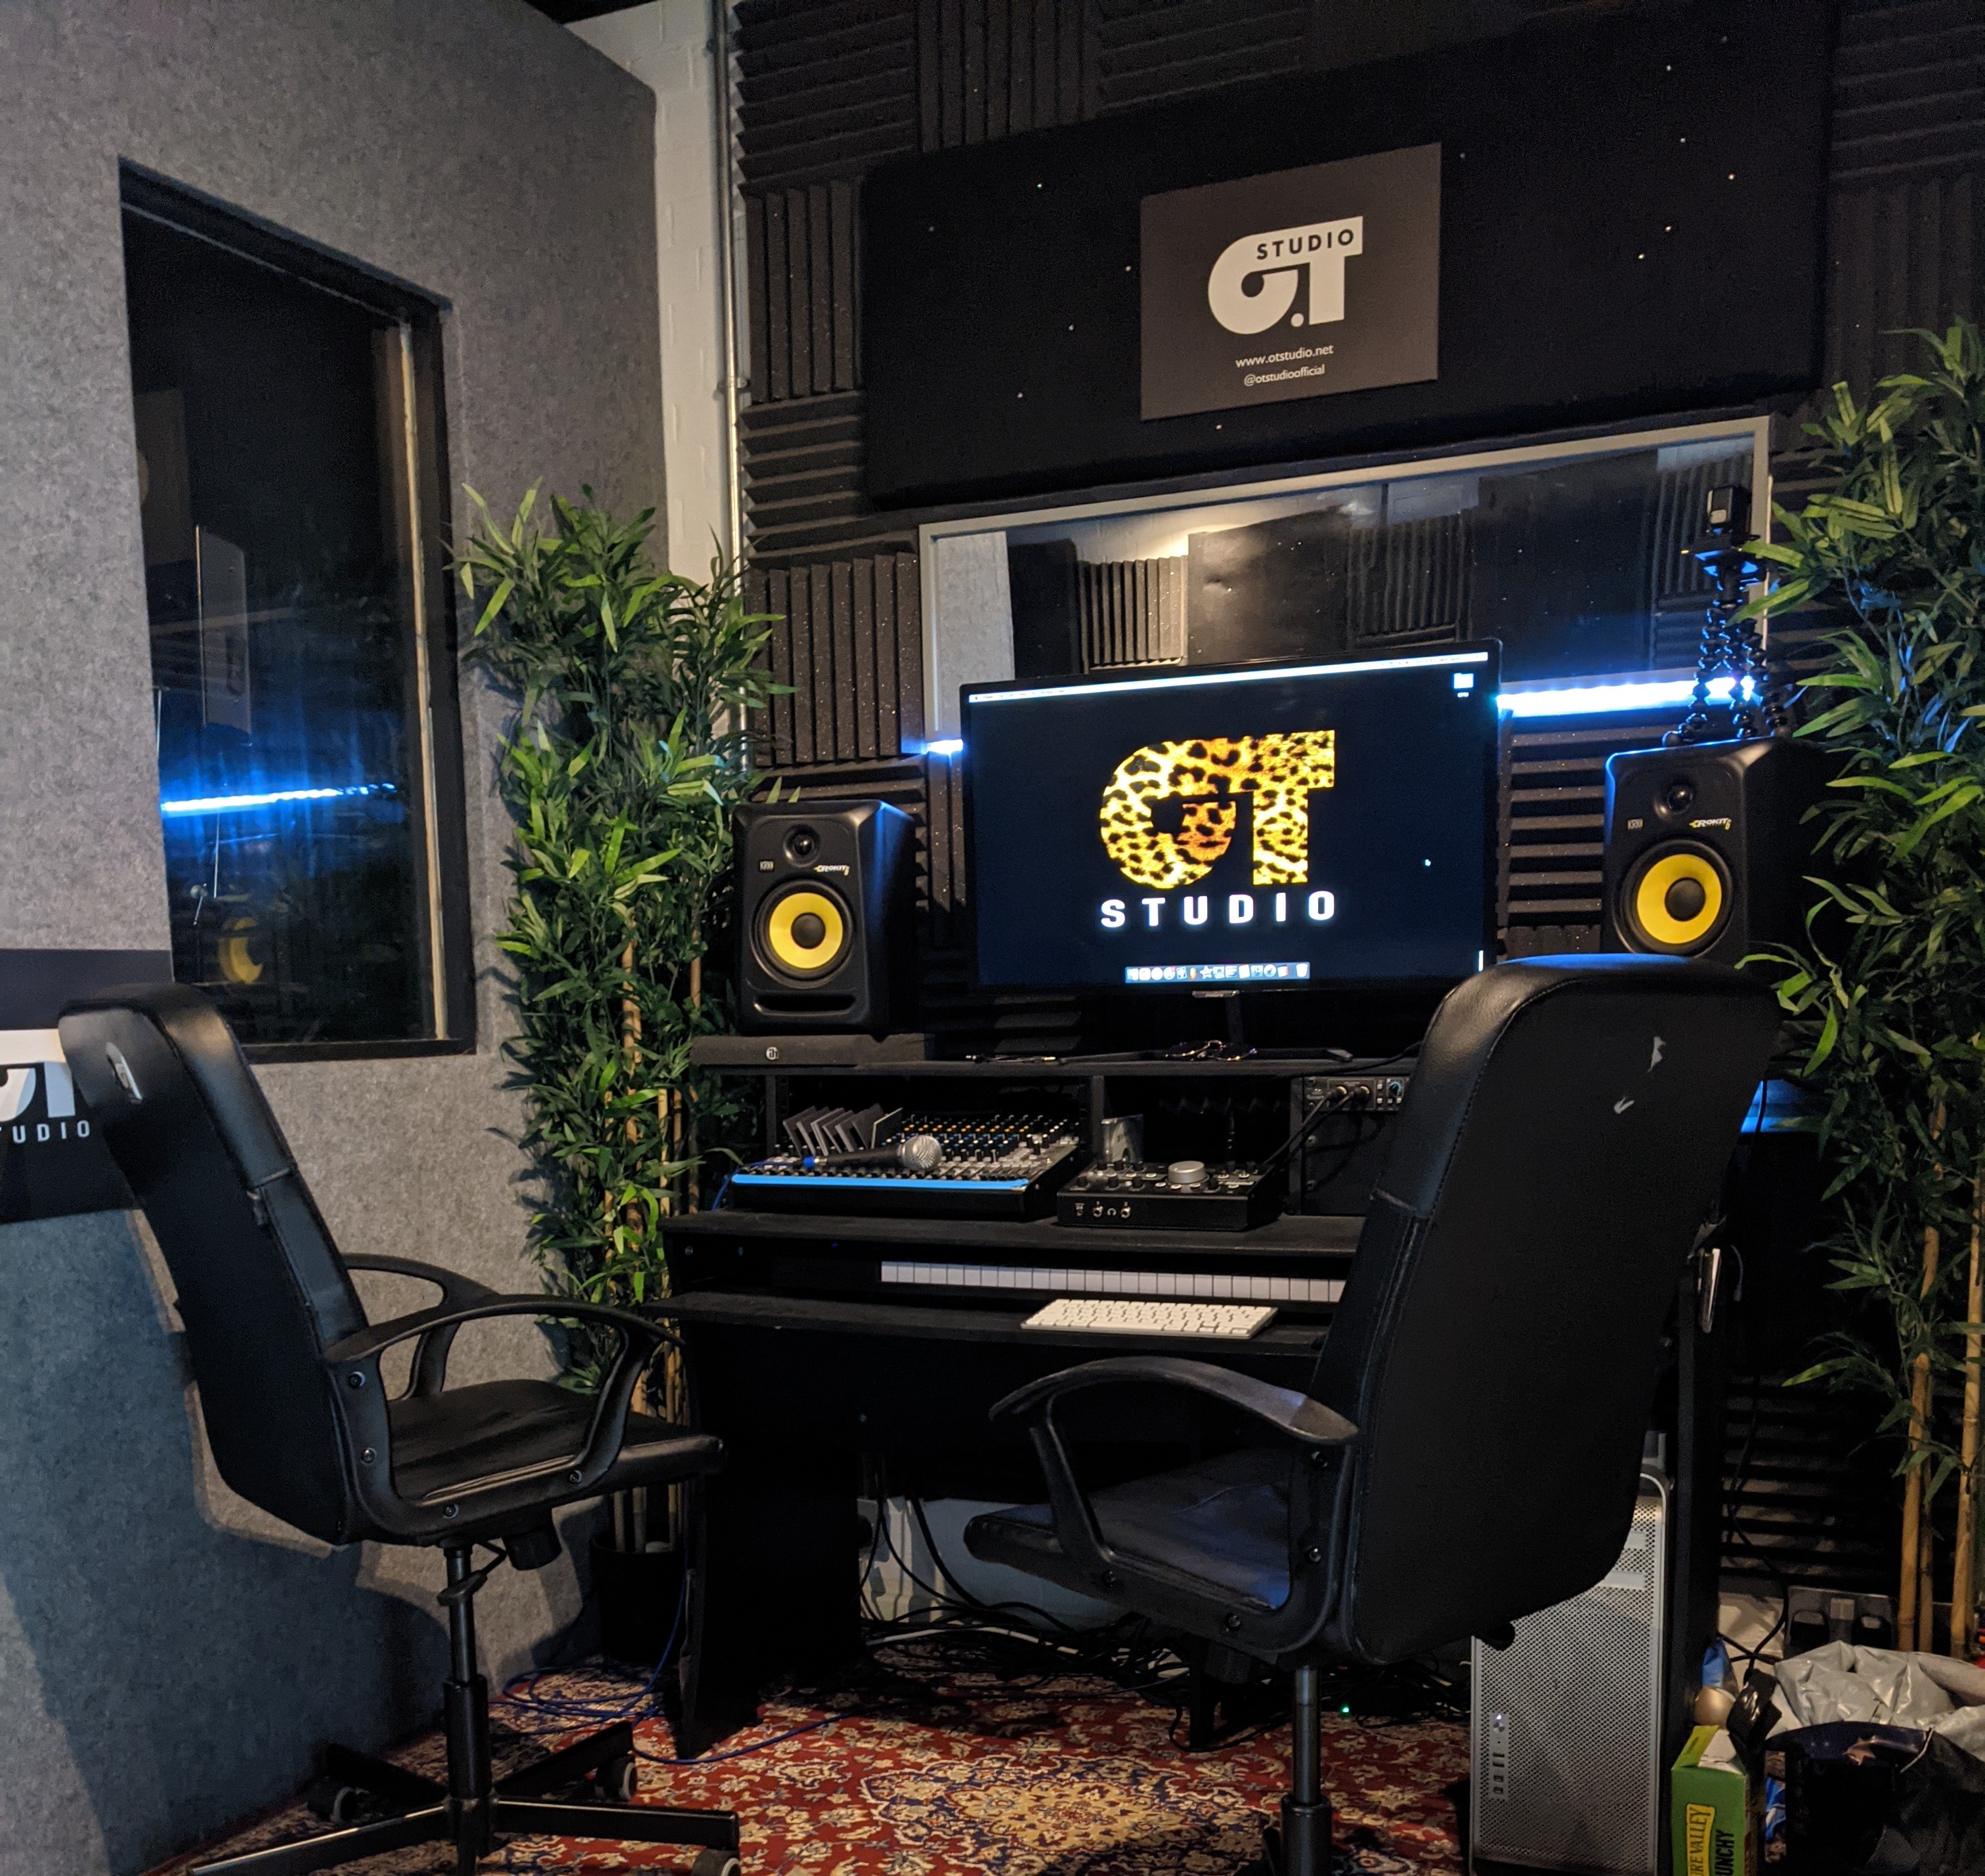 Specialist recording equipment pictured inside OT Music Studio.